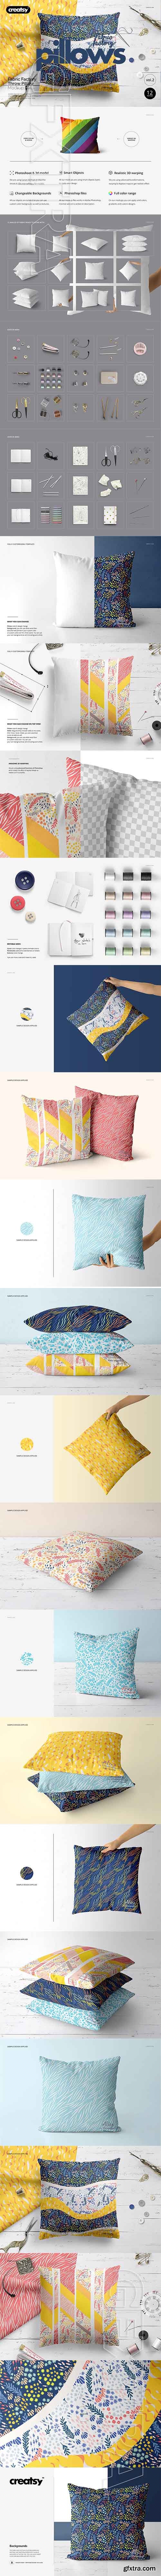 CreativeMarket - Fabric Factory vol. 2 Pillow Mockup 2162667